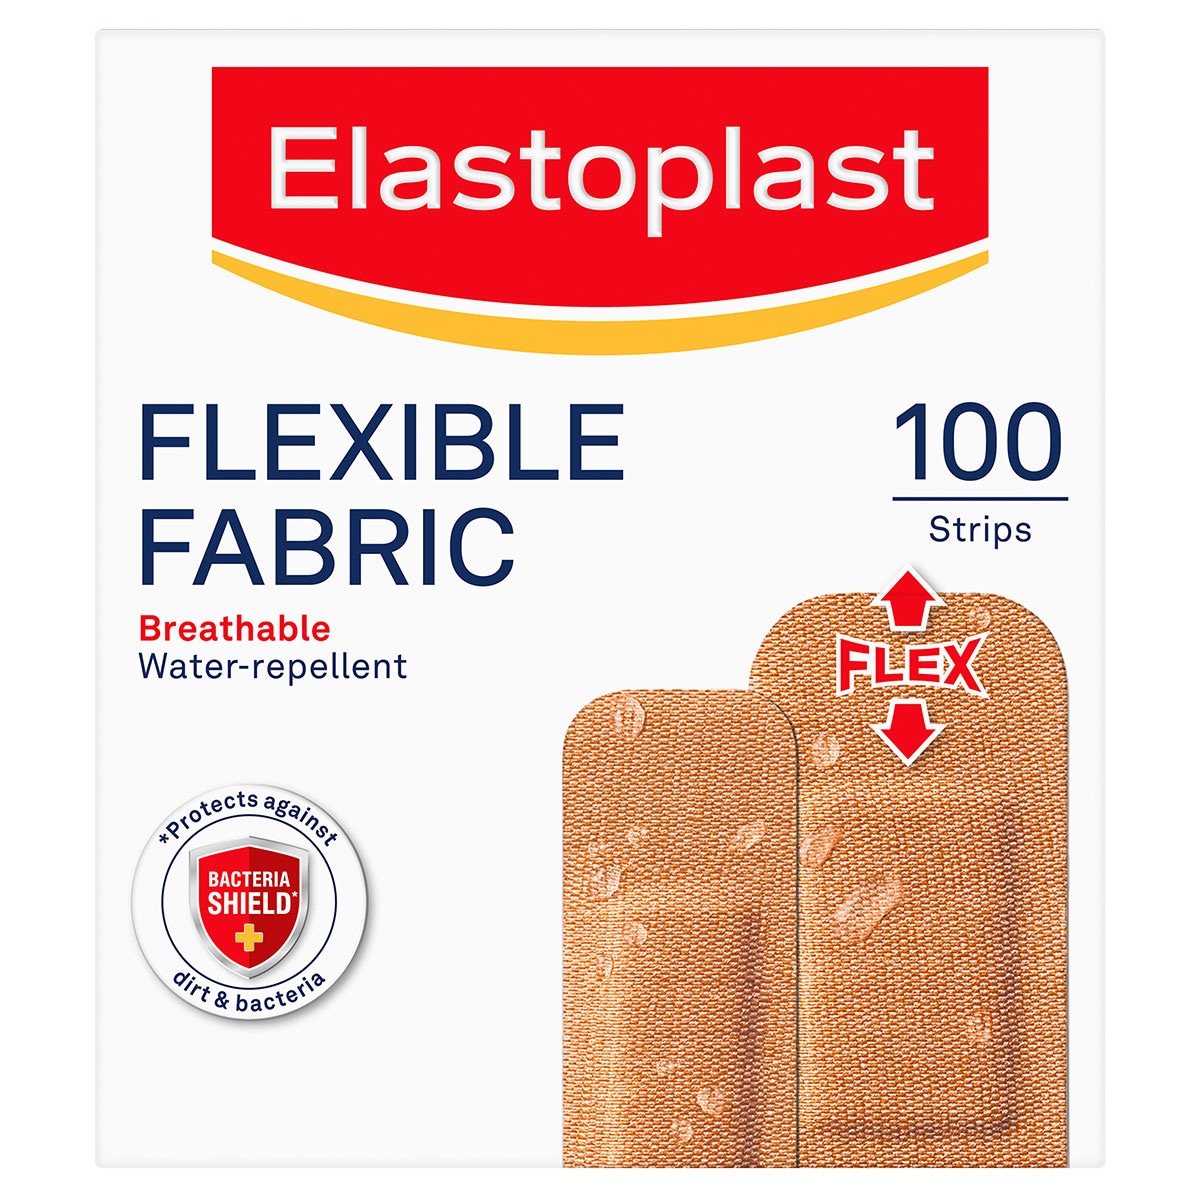 Elastoplast Flexible Fabric Breathable Strips 100 Pack